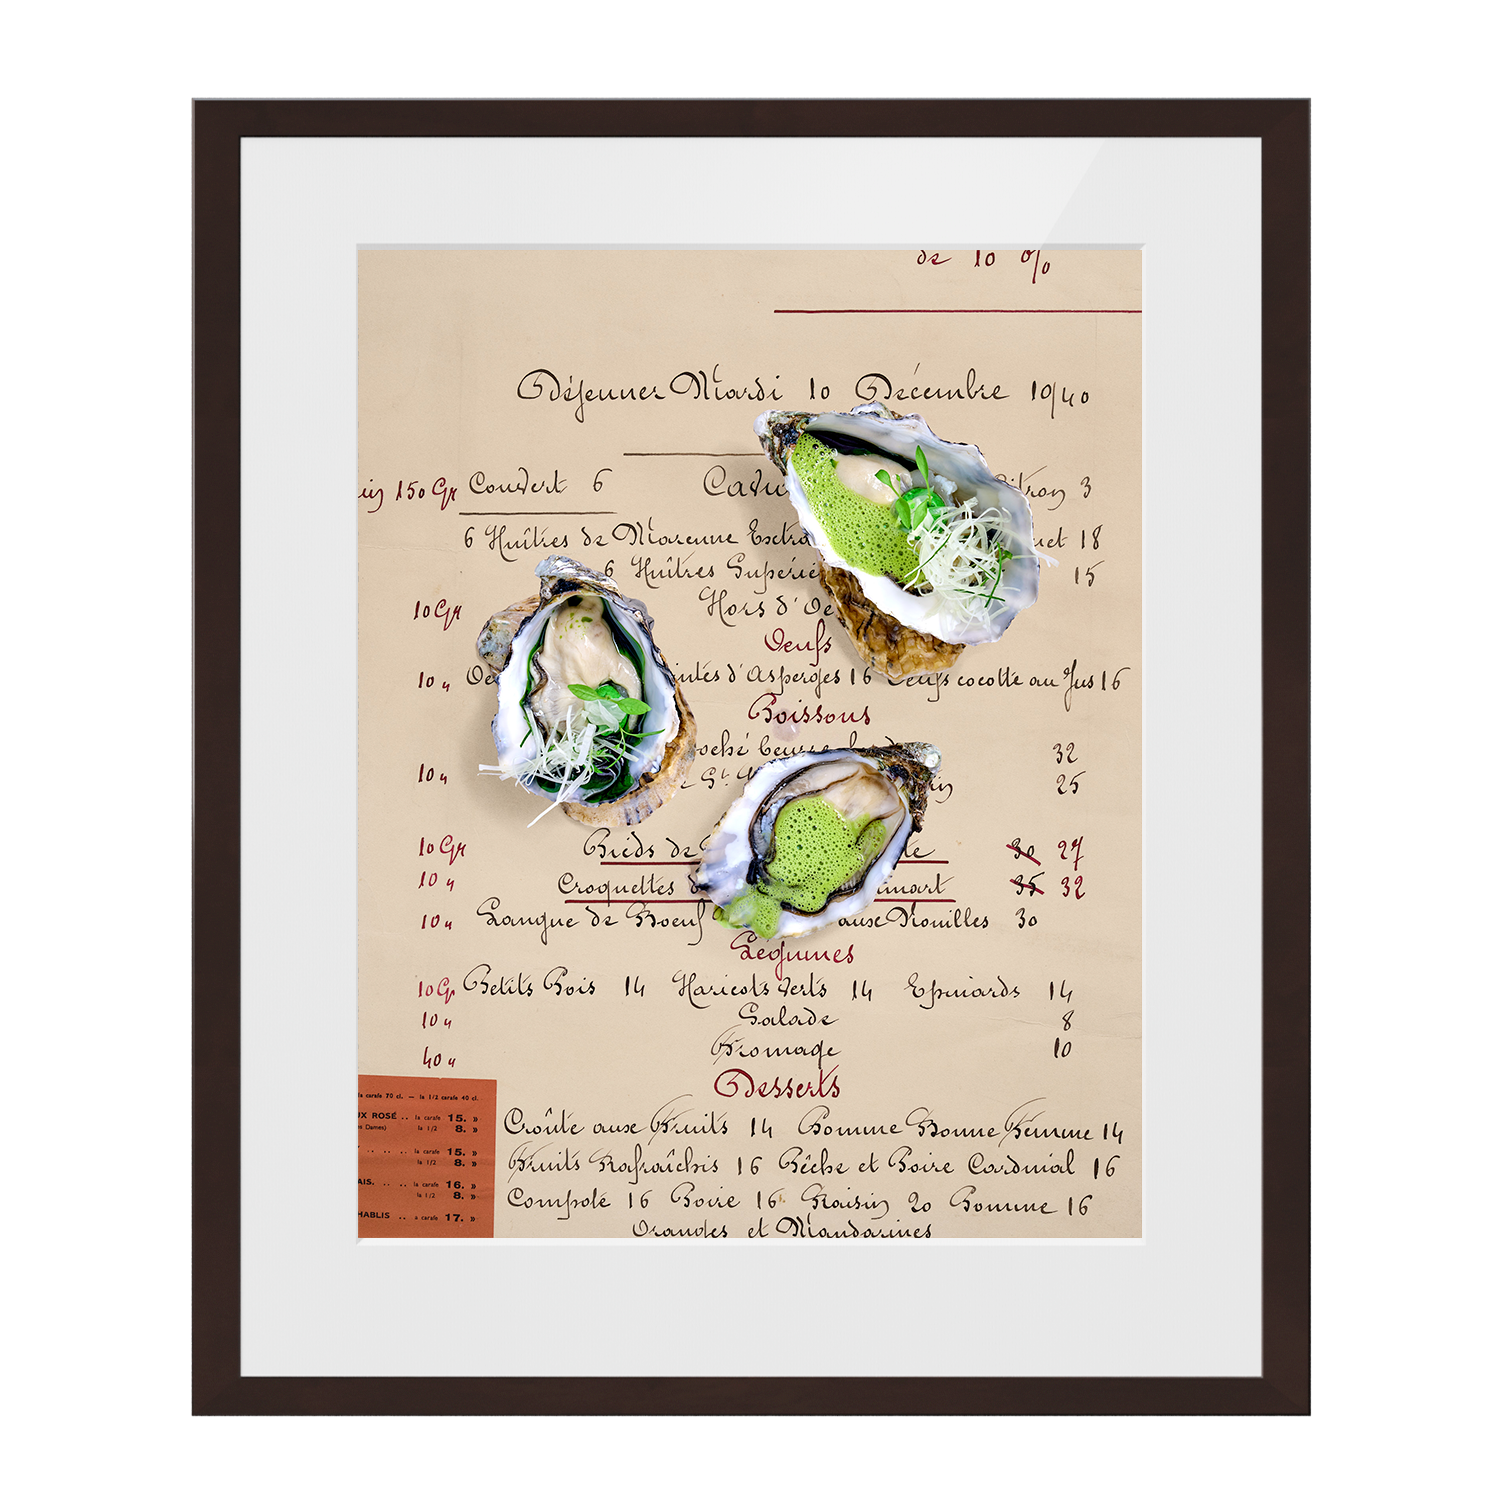 culinary timepieces: Huîtres vertes. 1940